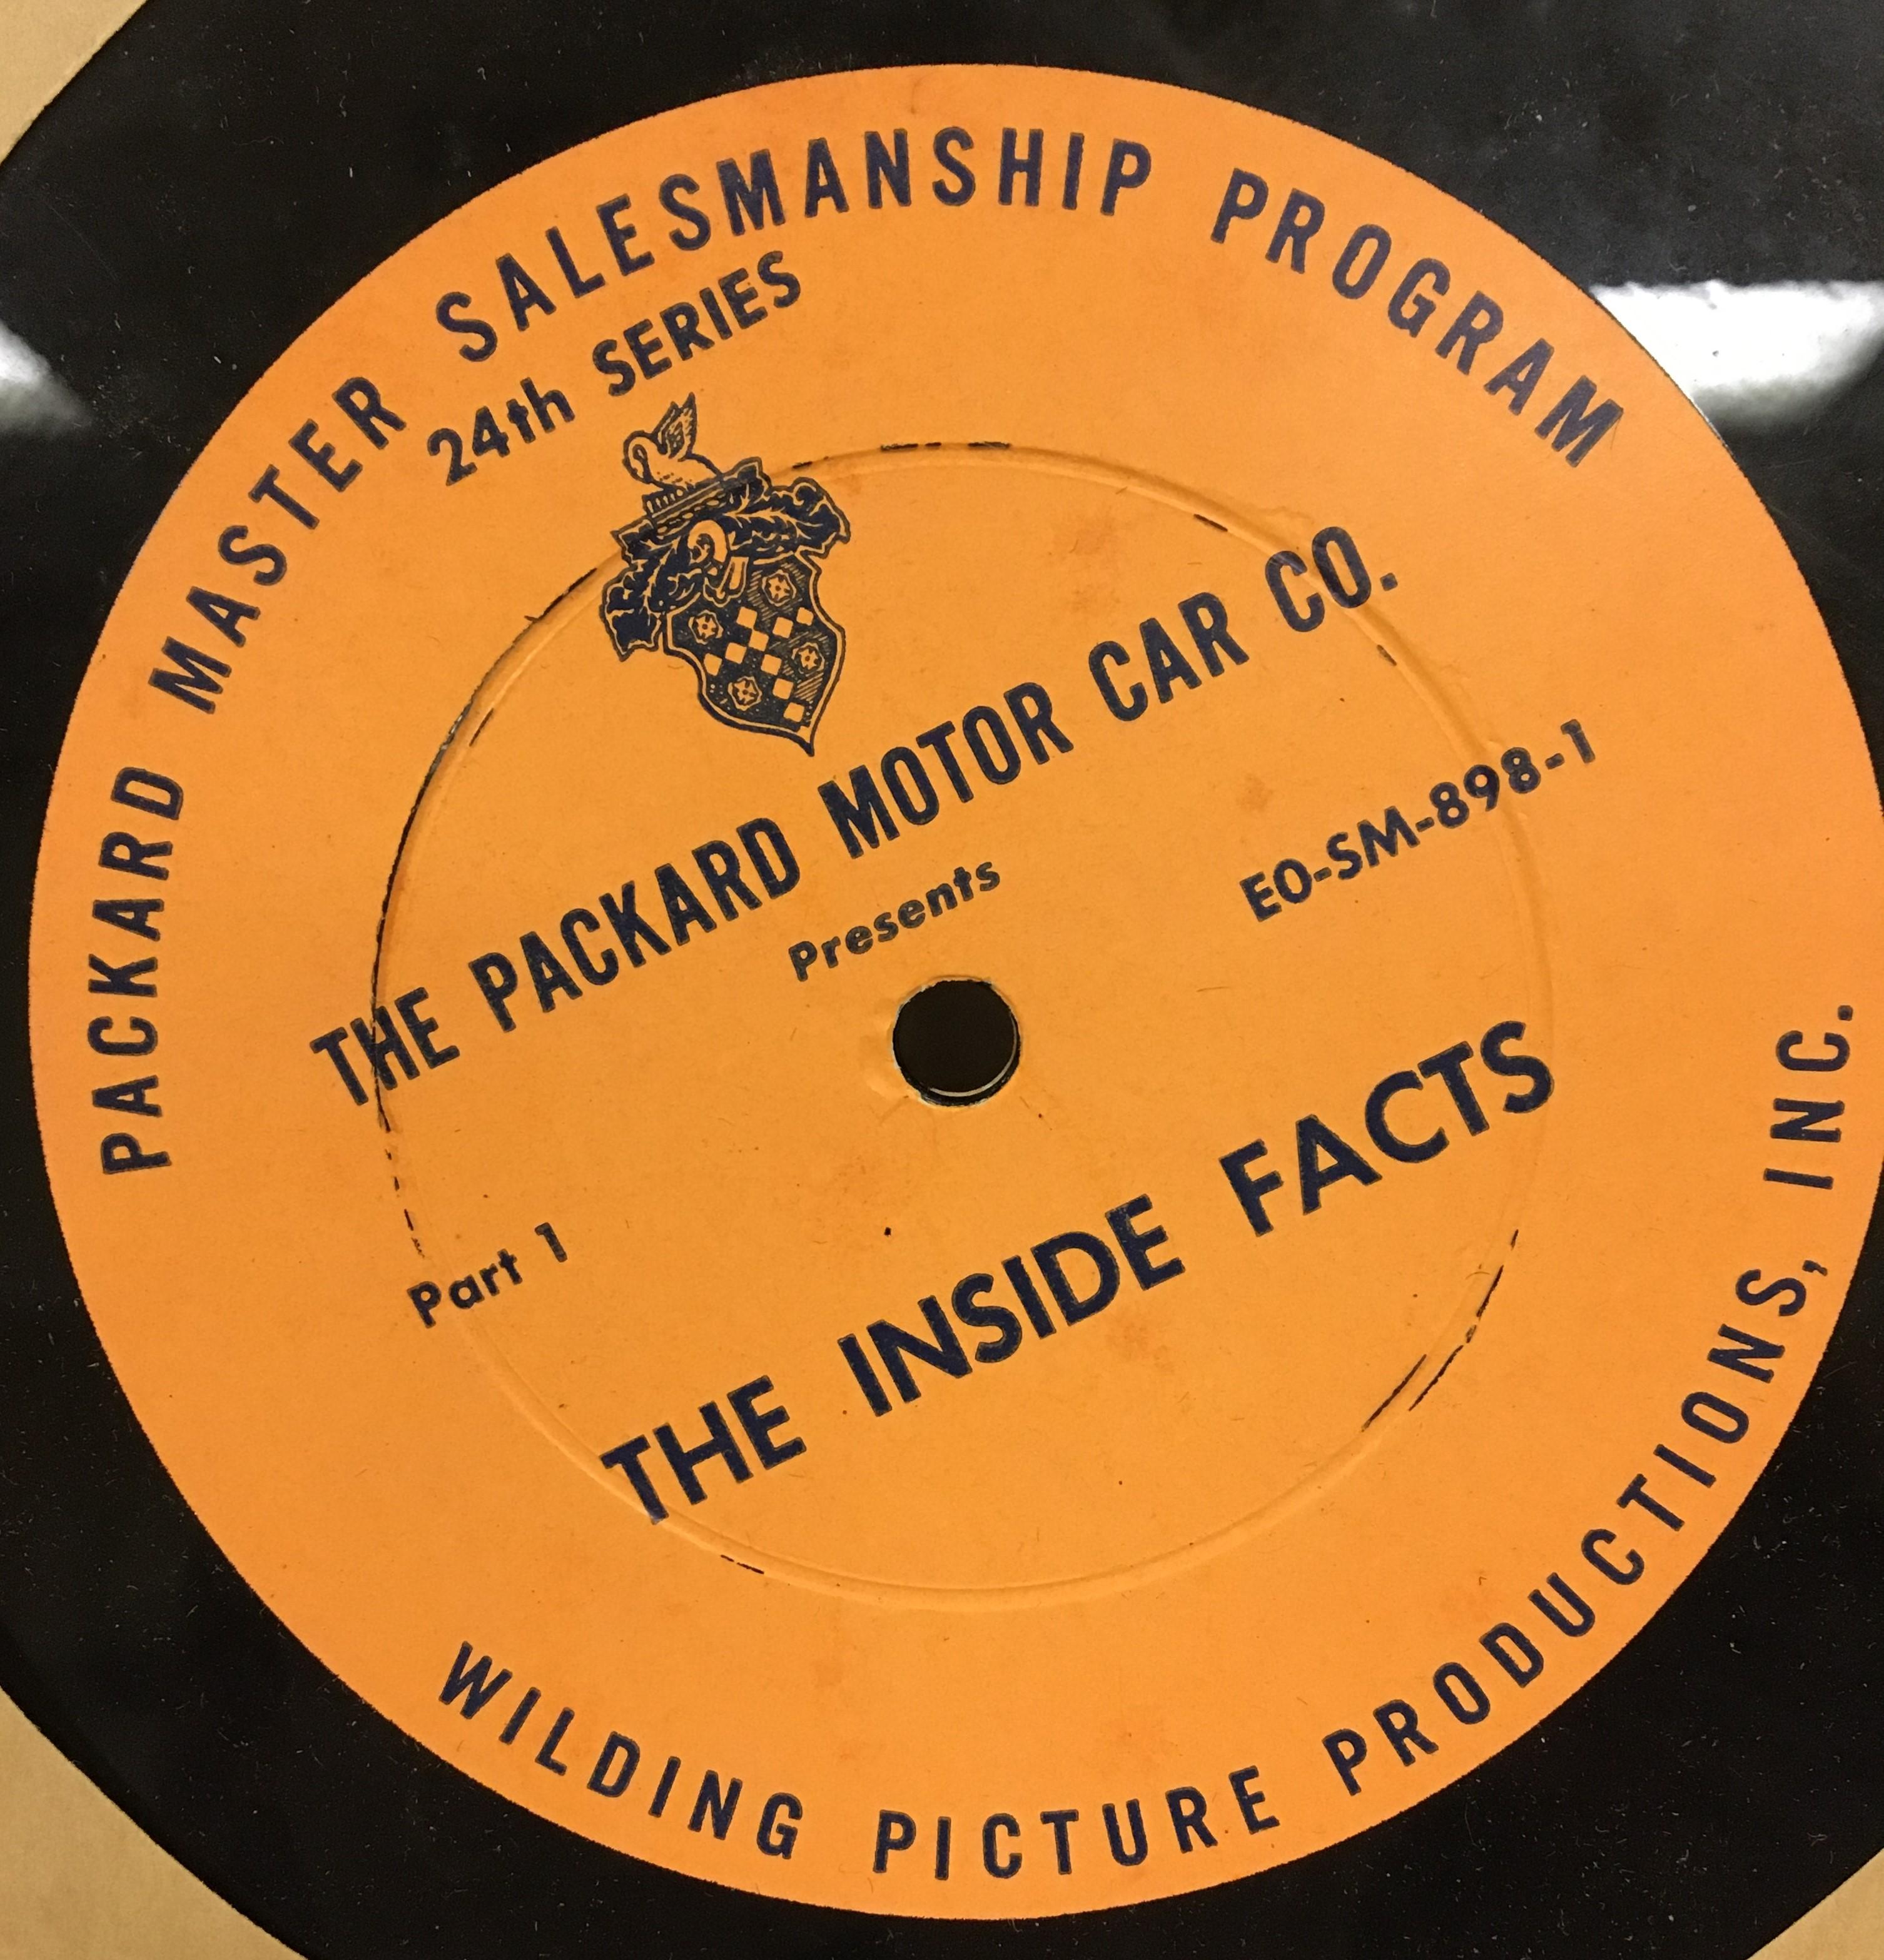 Packard Salesman Program â€“ â€œThe Inside Factsâ€� Film and 16â€� Record